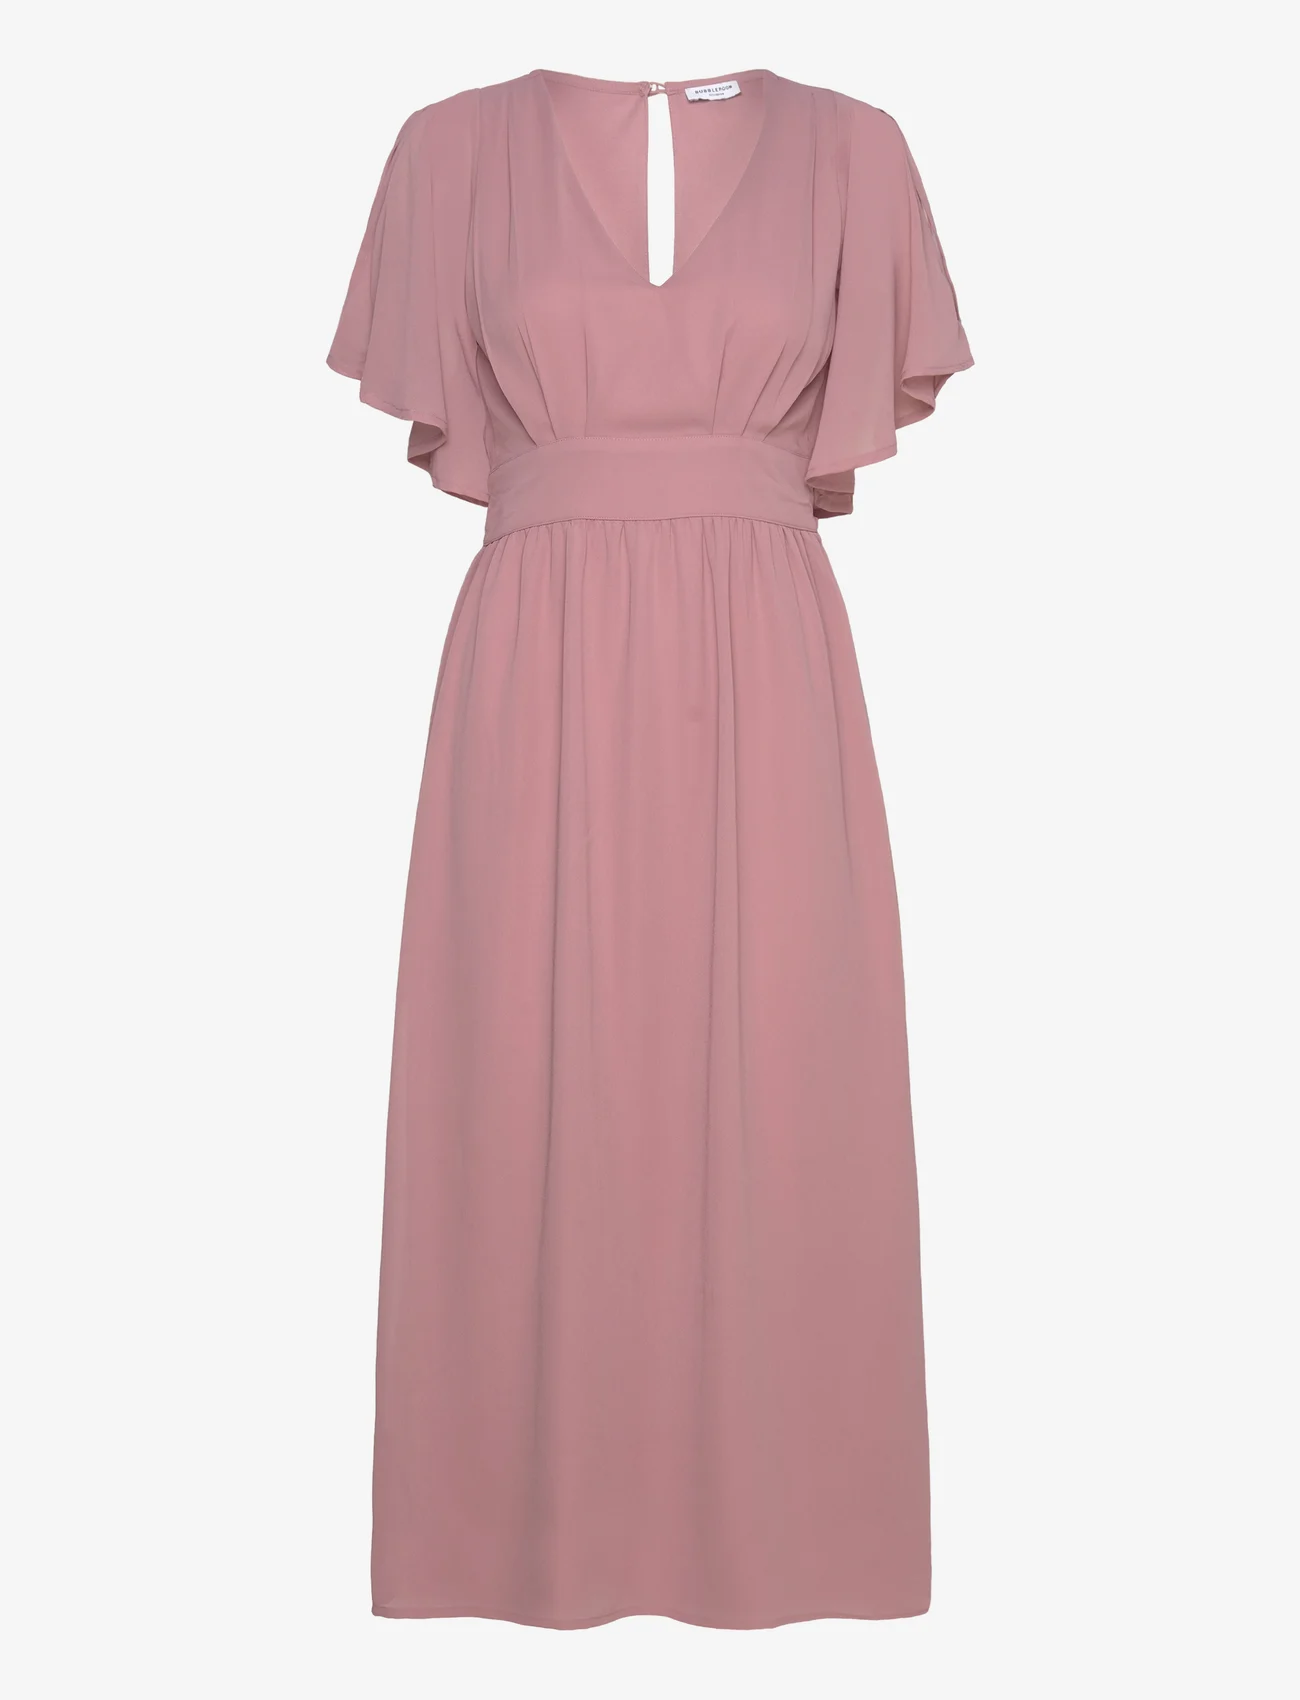 Bubbleroom - Isobel midi Dress - midi kjoler - pink - 0